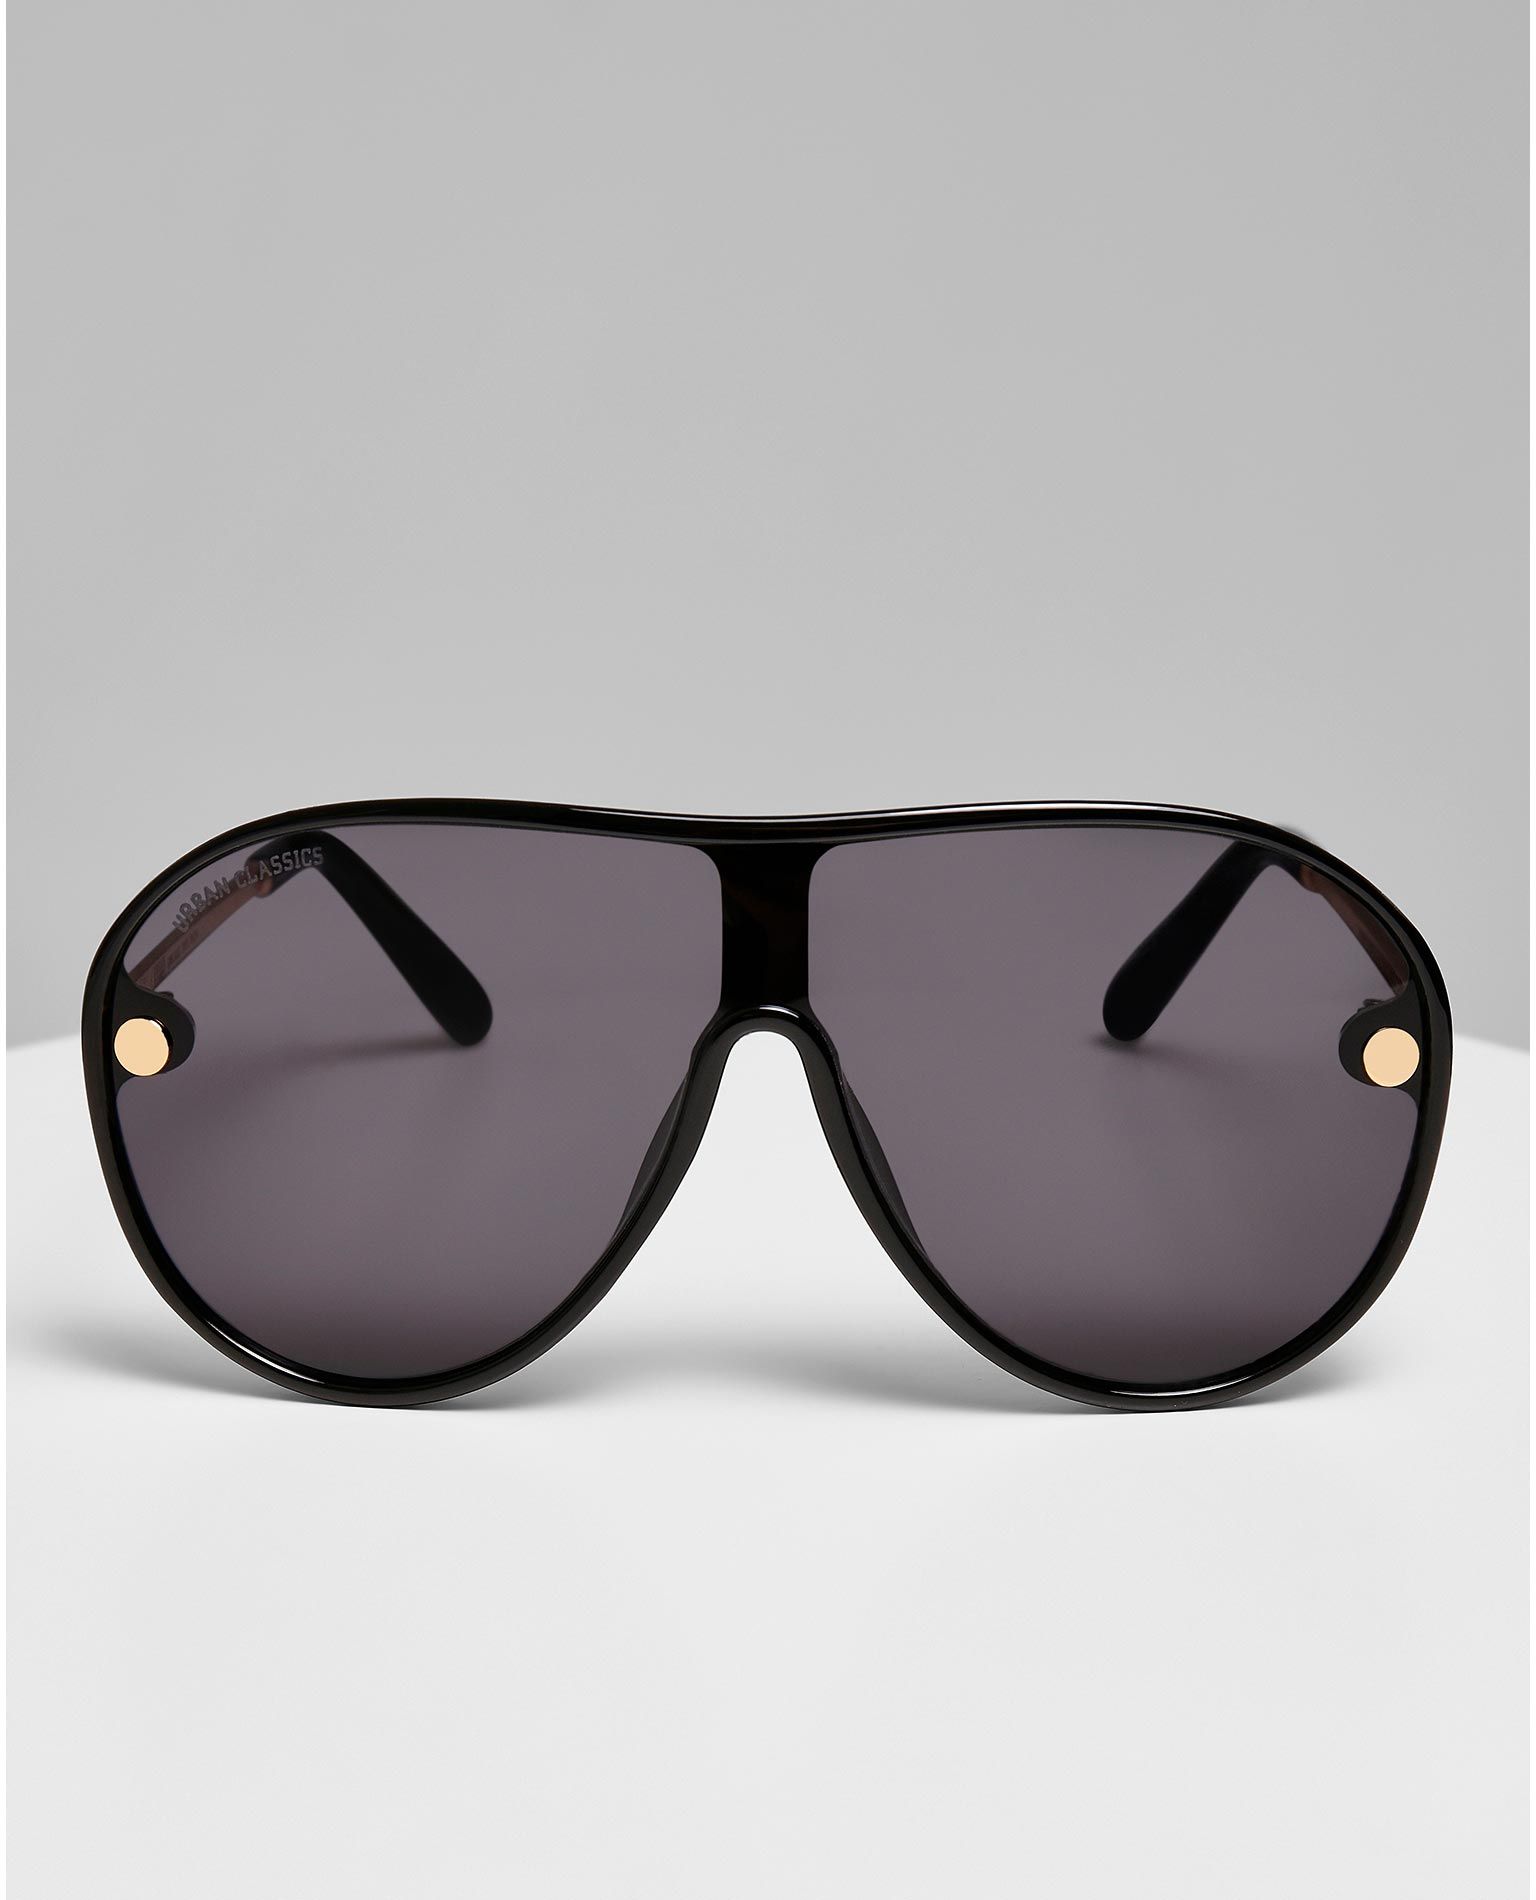 Urban Naxos Classics Sunglasses